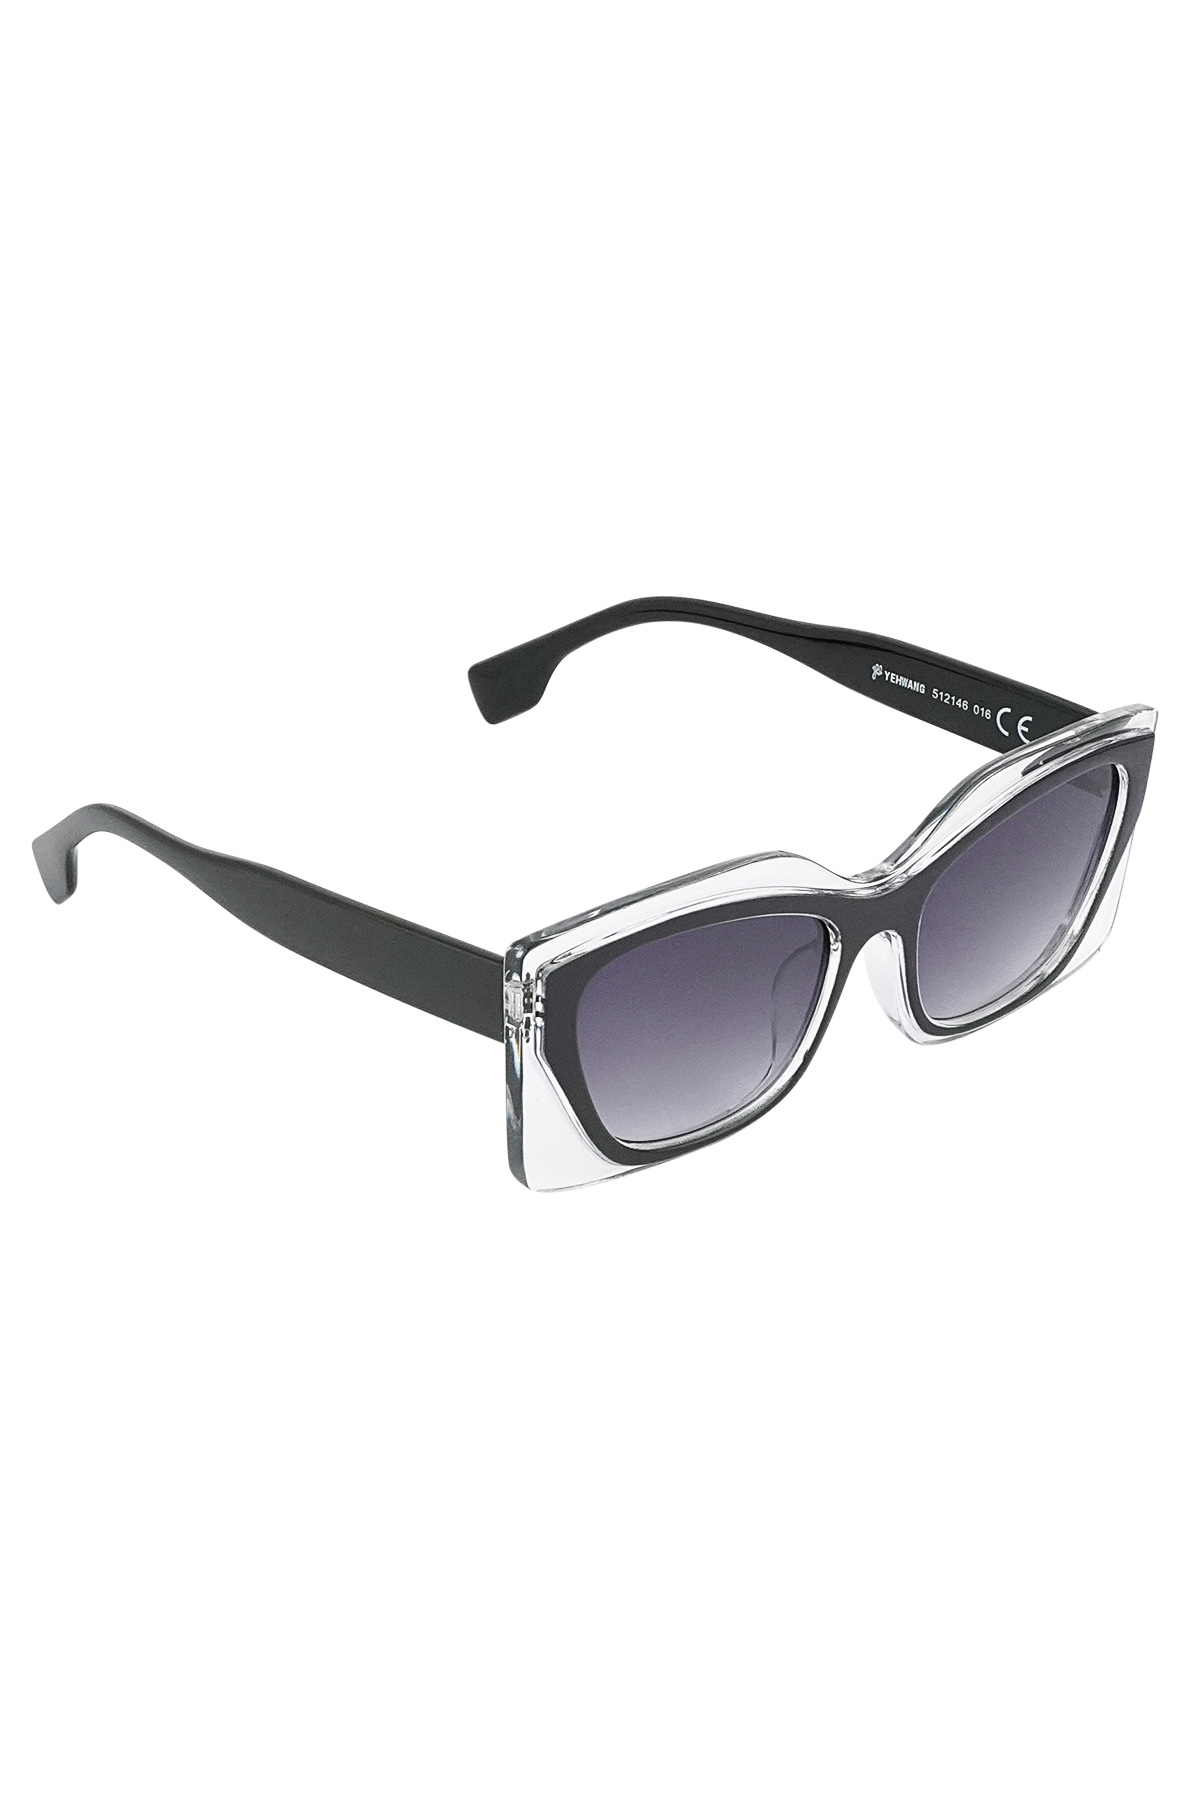 Double frame sunglasses - black/grey